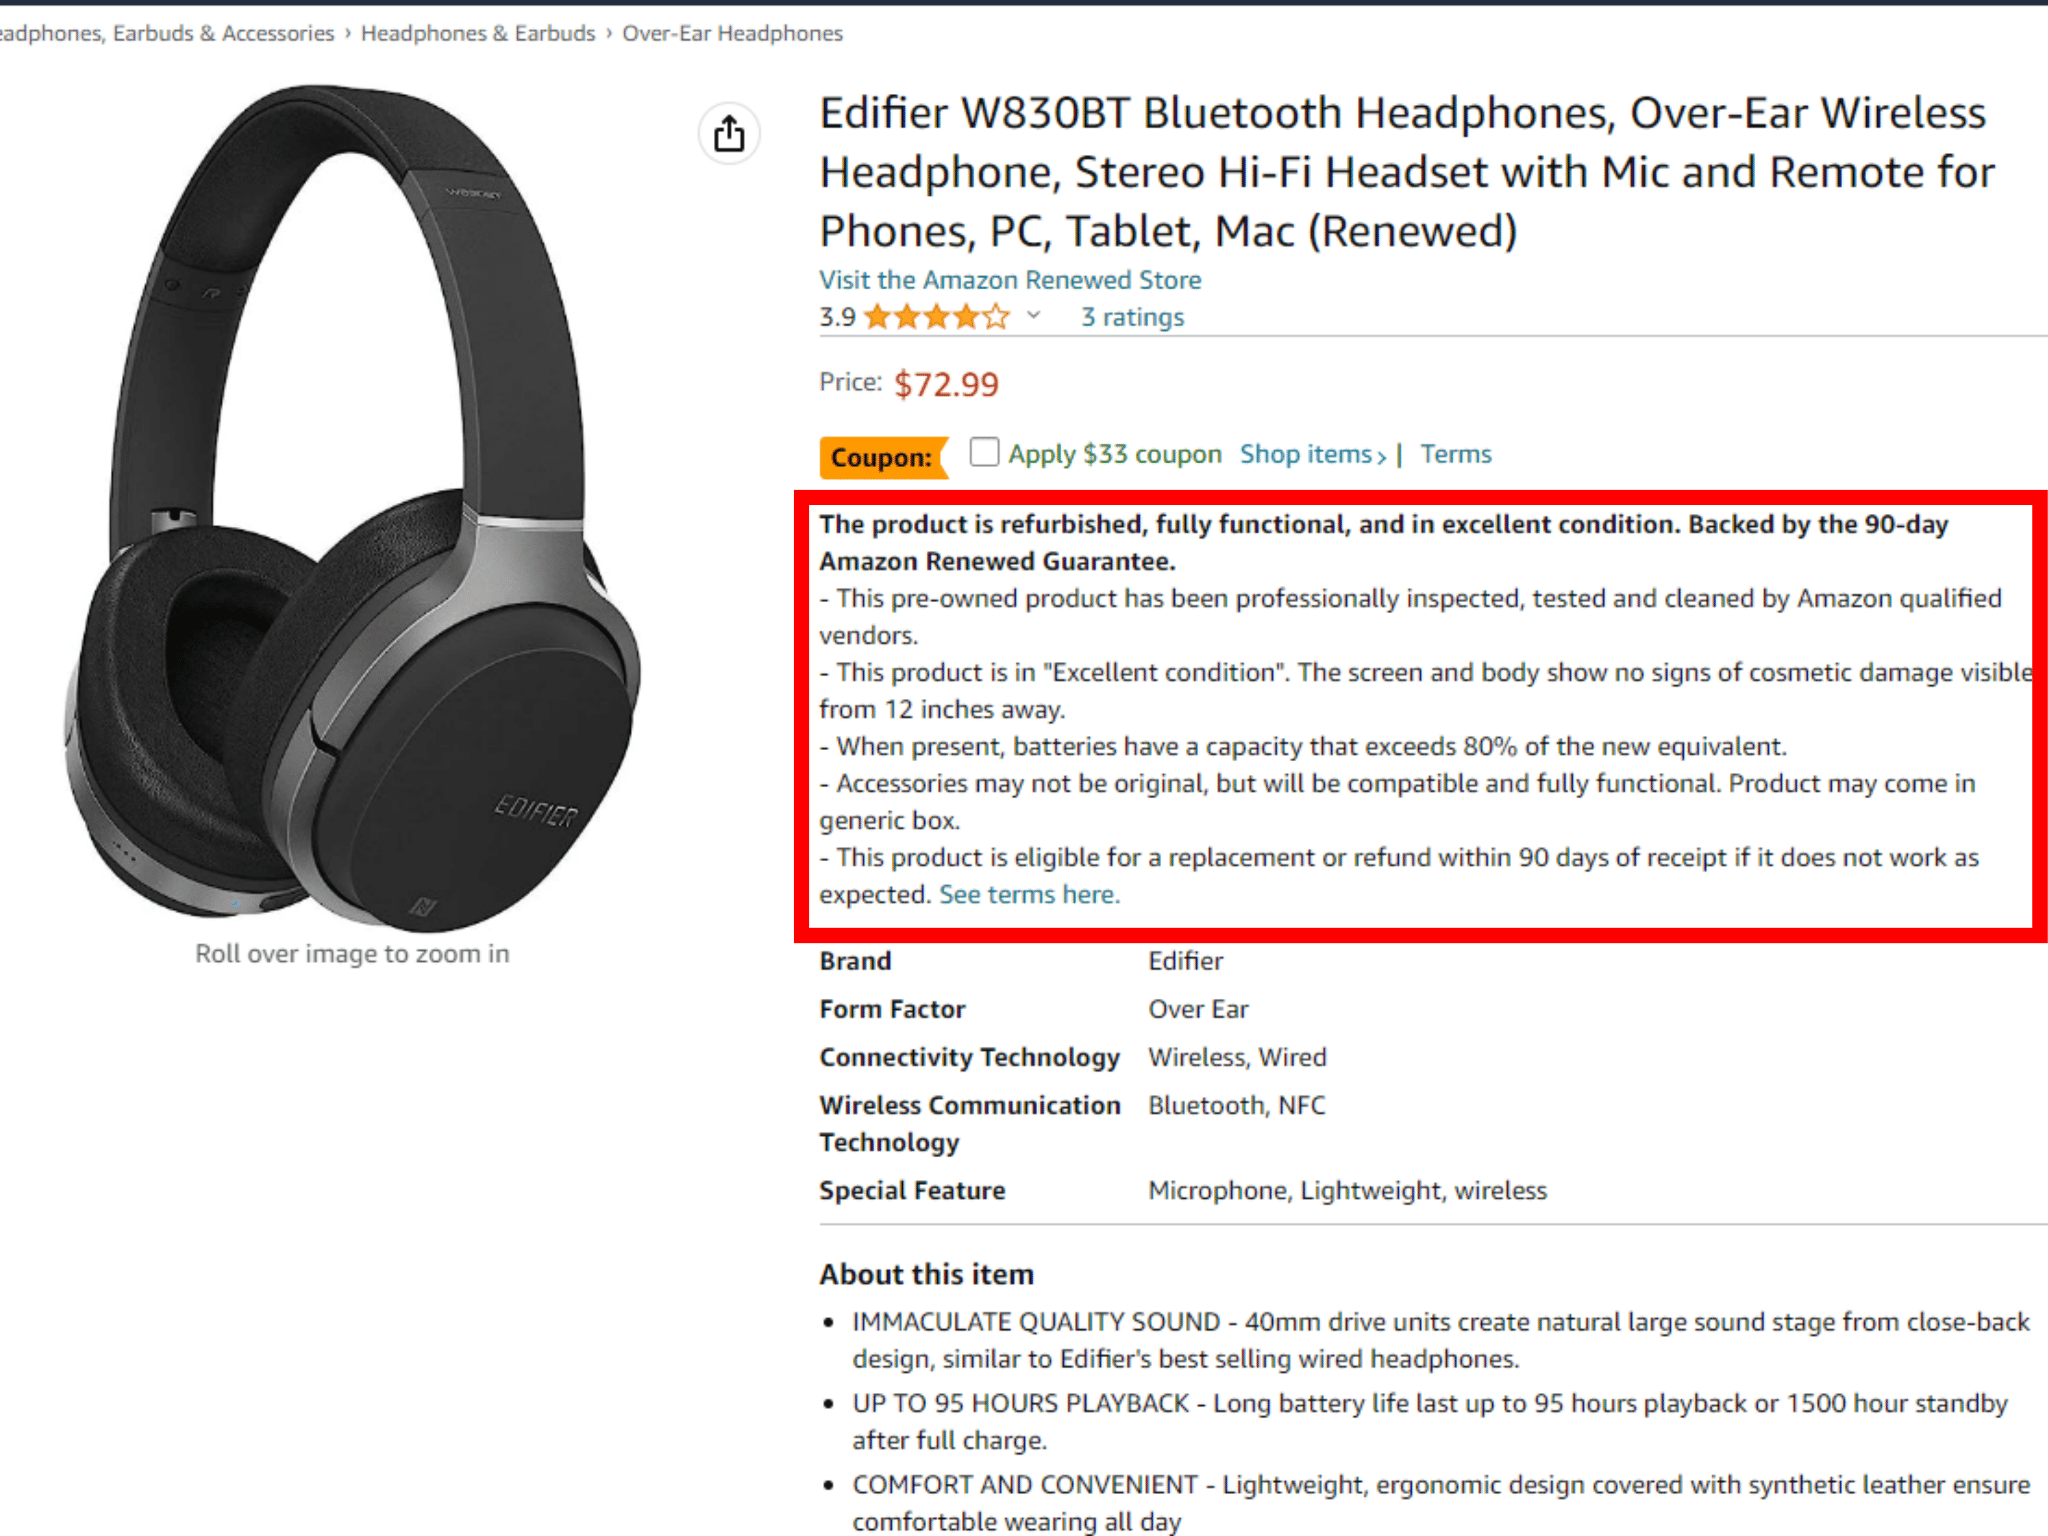 Amazon Renewed product description of a headphone.